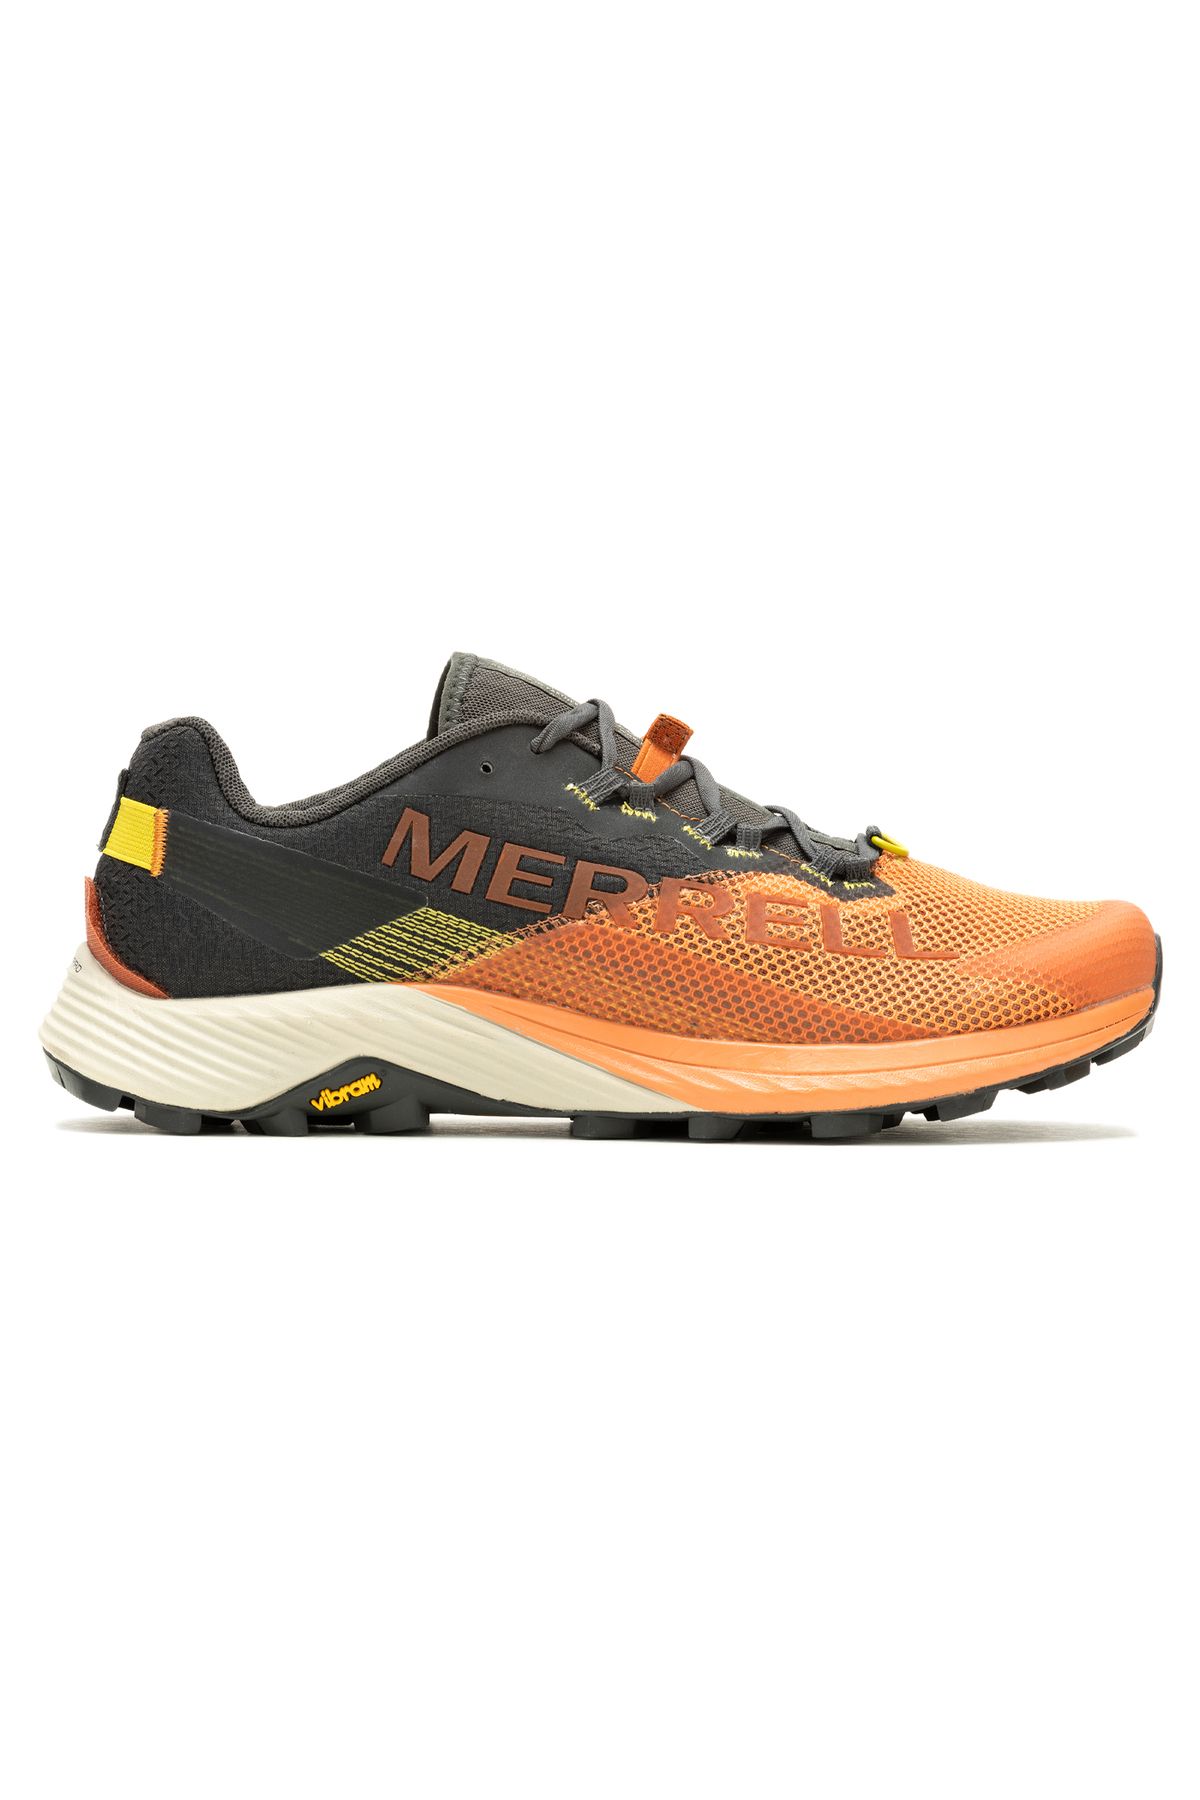 Merrell Mtl Long Sky 2 Erkek Patika Koşu Ayakkabısı